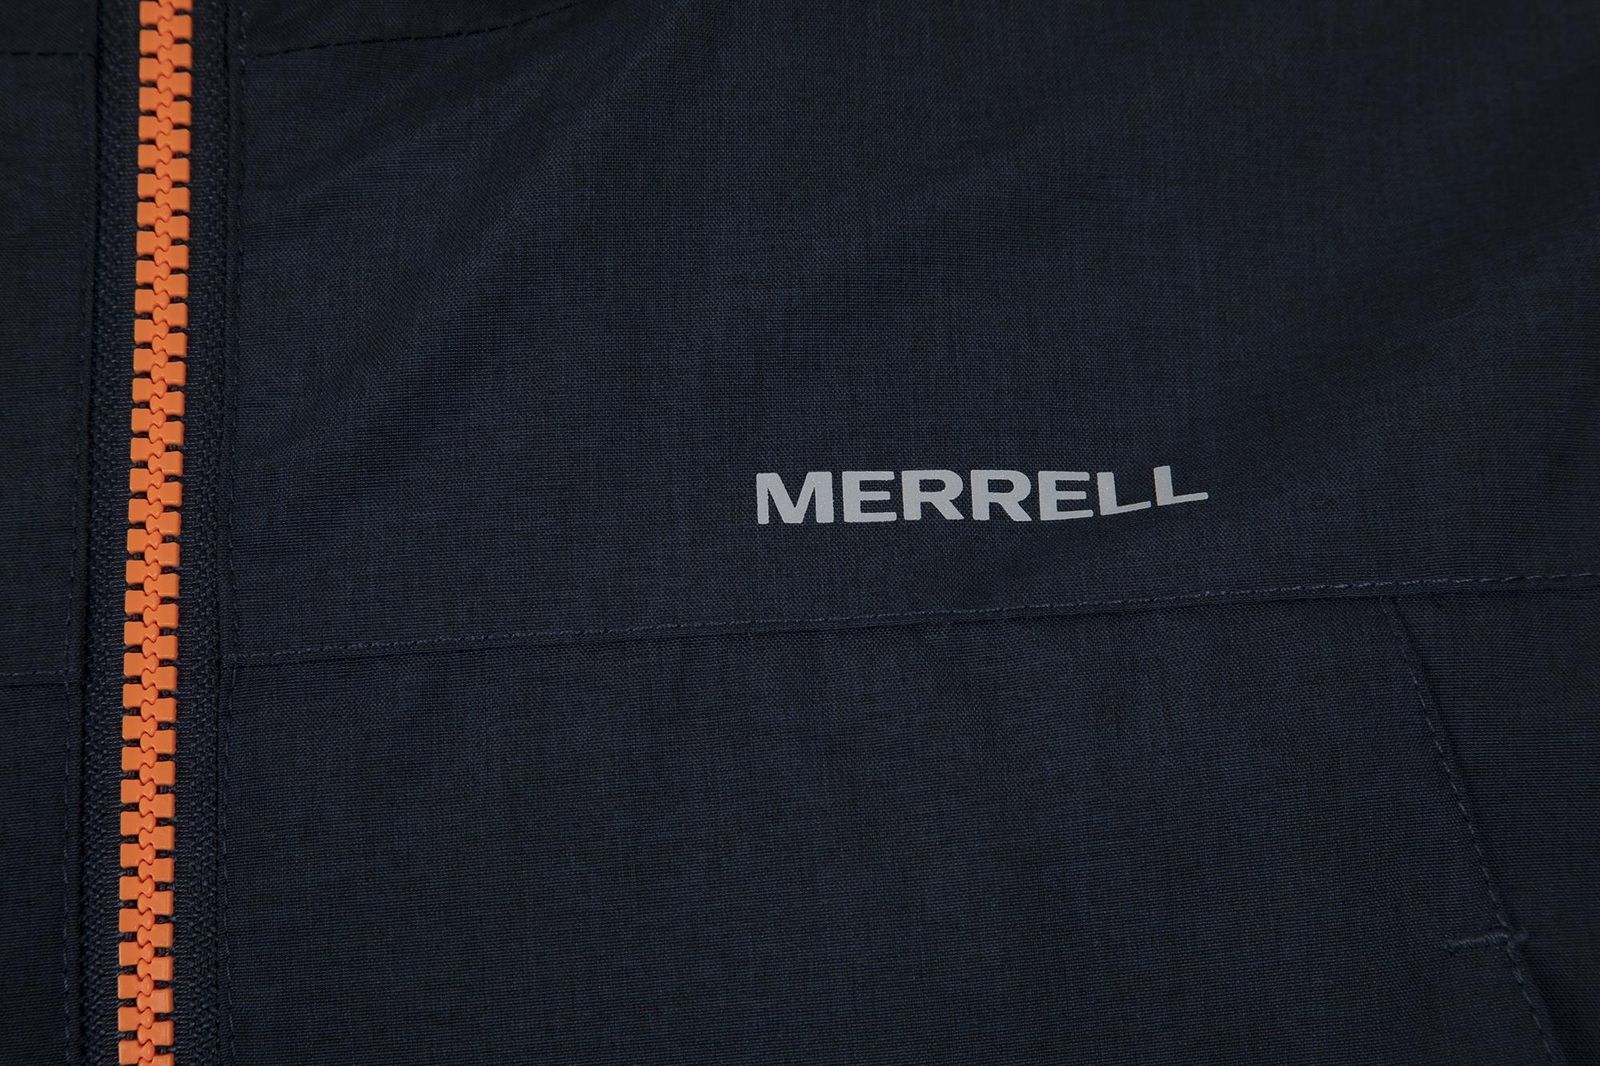   Merrell Men's Windbreaker, : -. S19AMRJAM04-Z4.  58